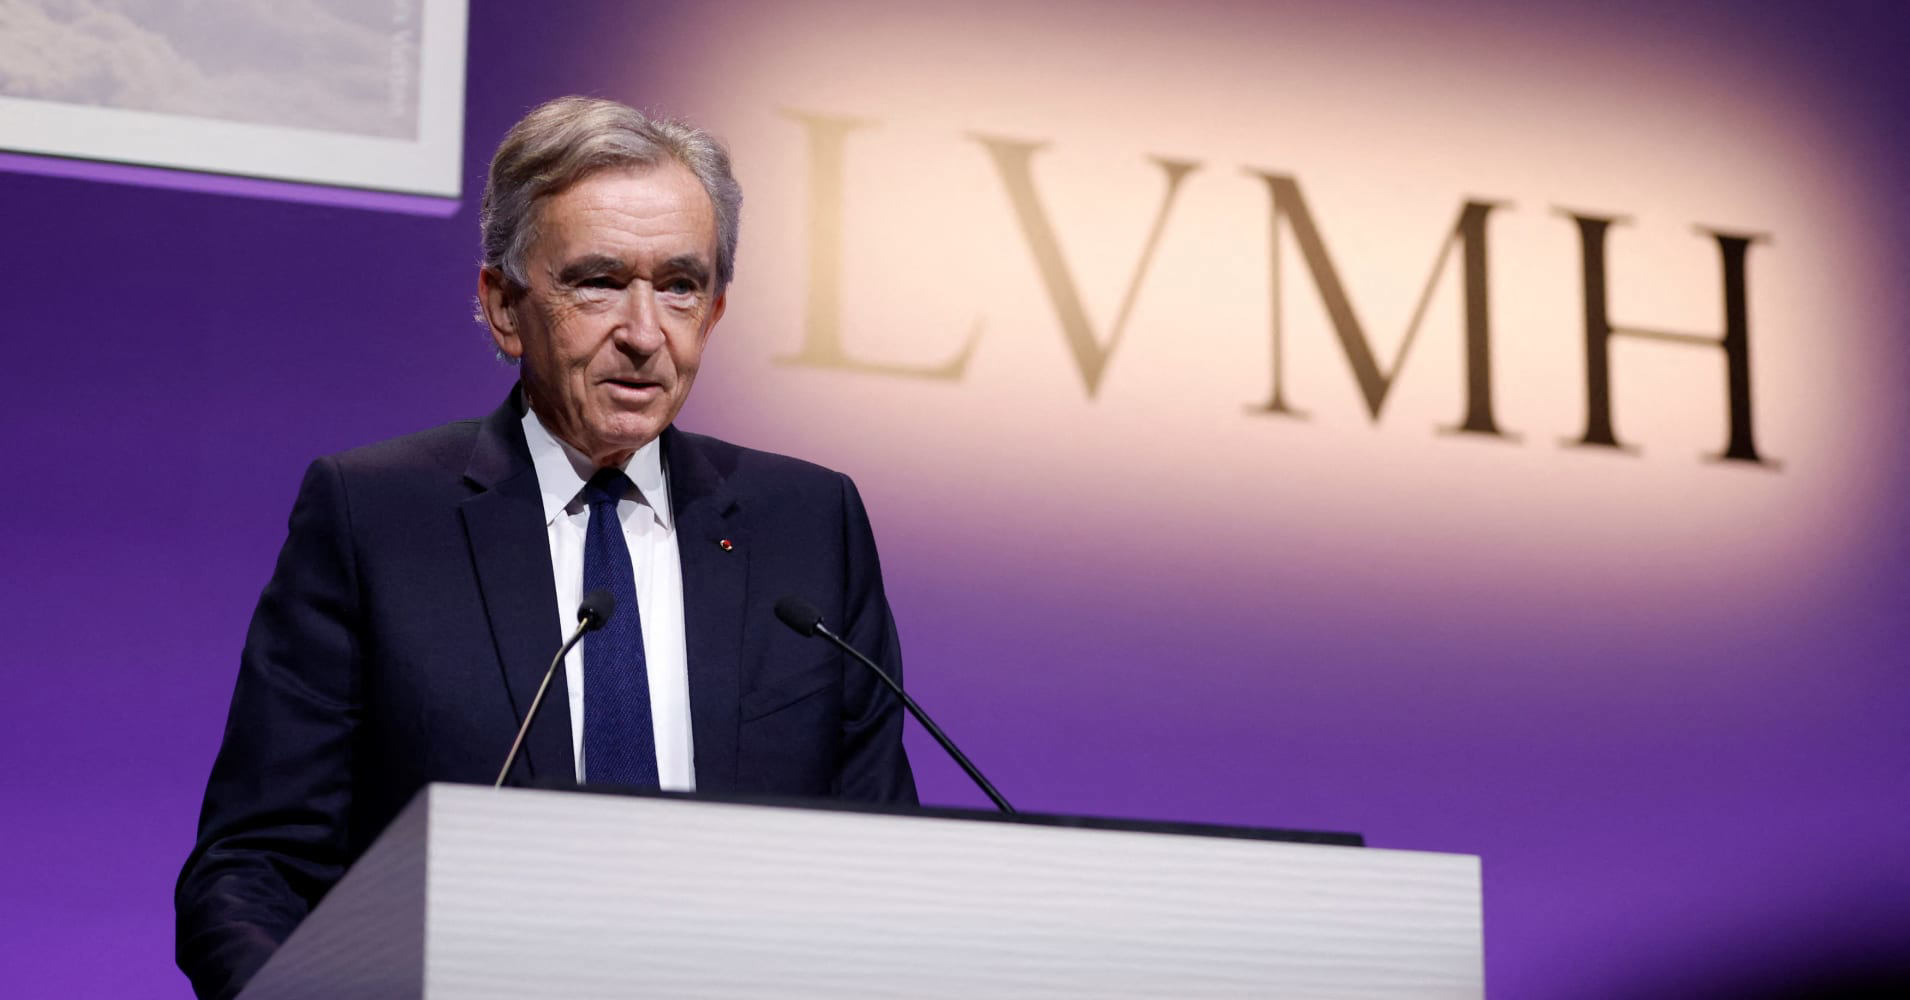 World's richest man and LVMH CEO Bernard Arnault is conducting